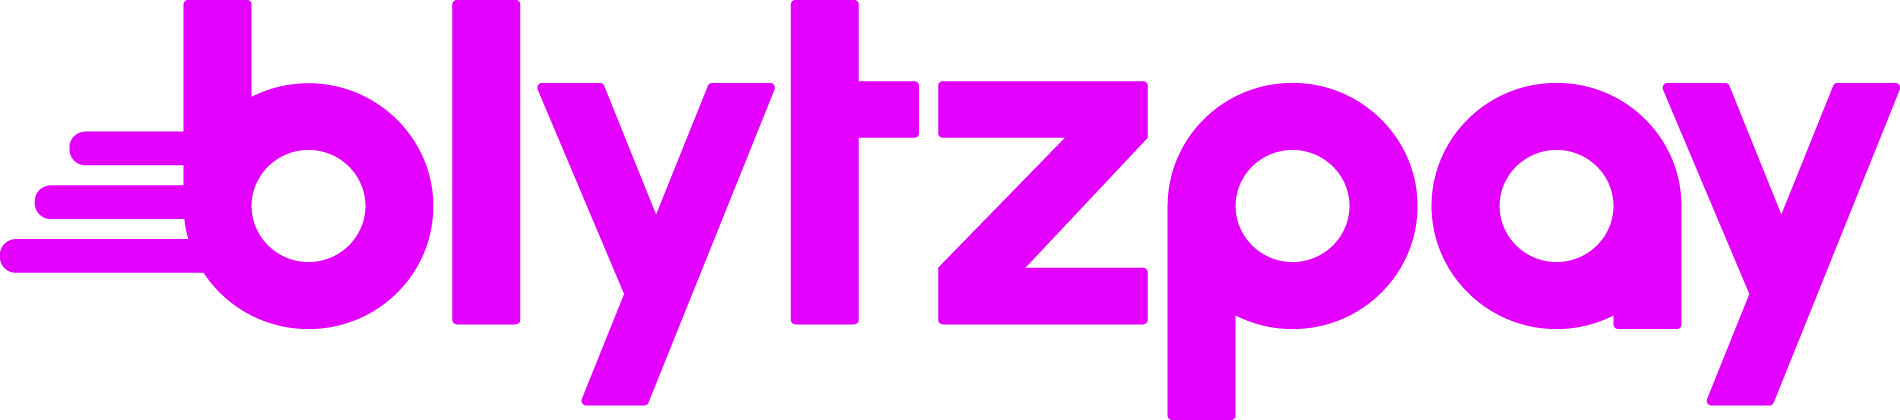 Blytzpay-Logo-Pink